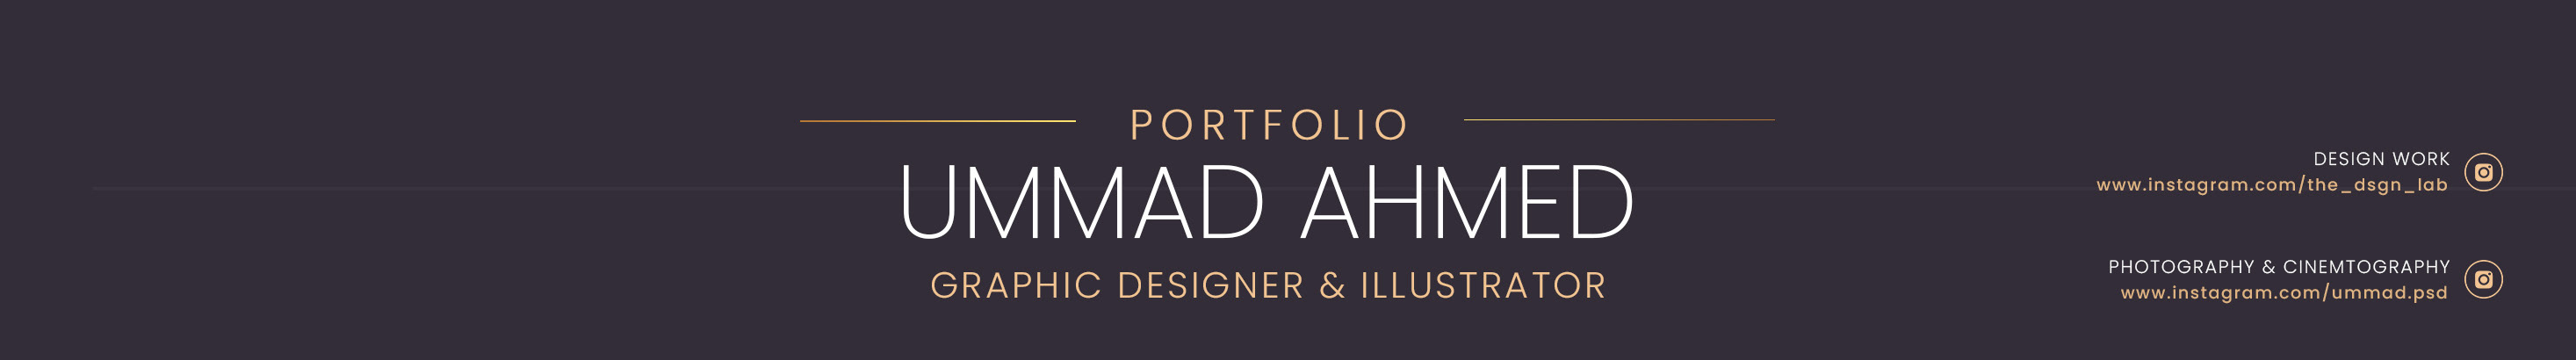 Ummad Ahmed's profile banner